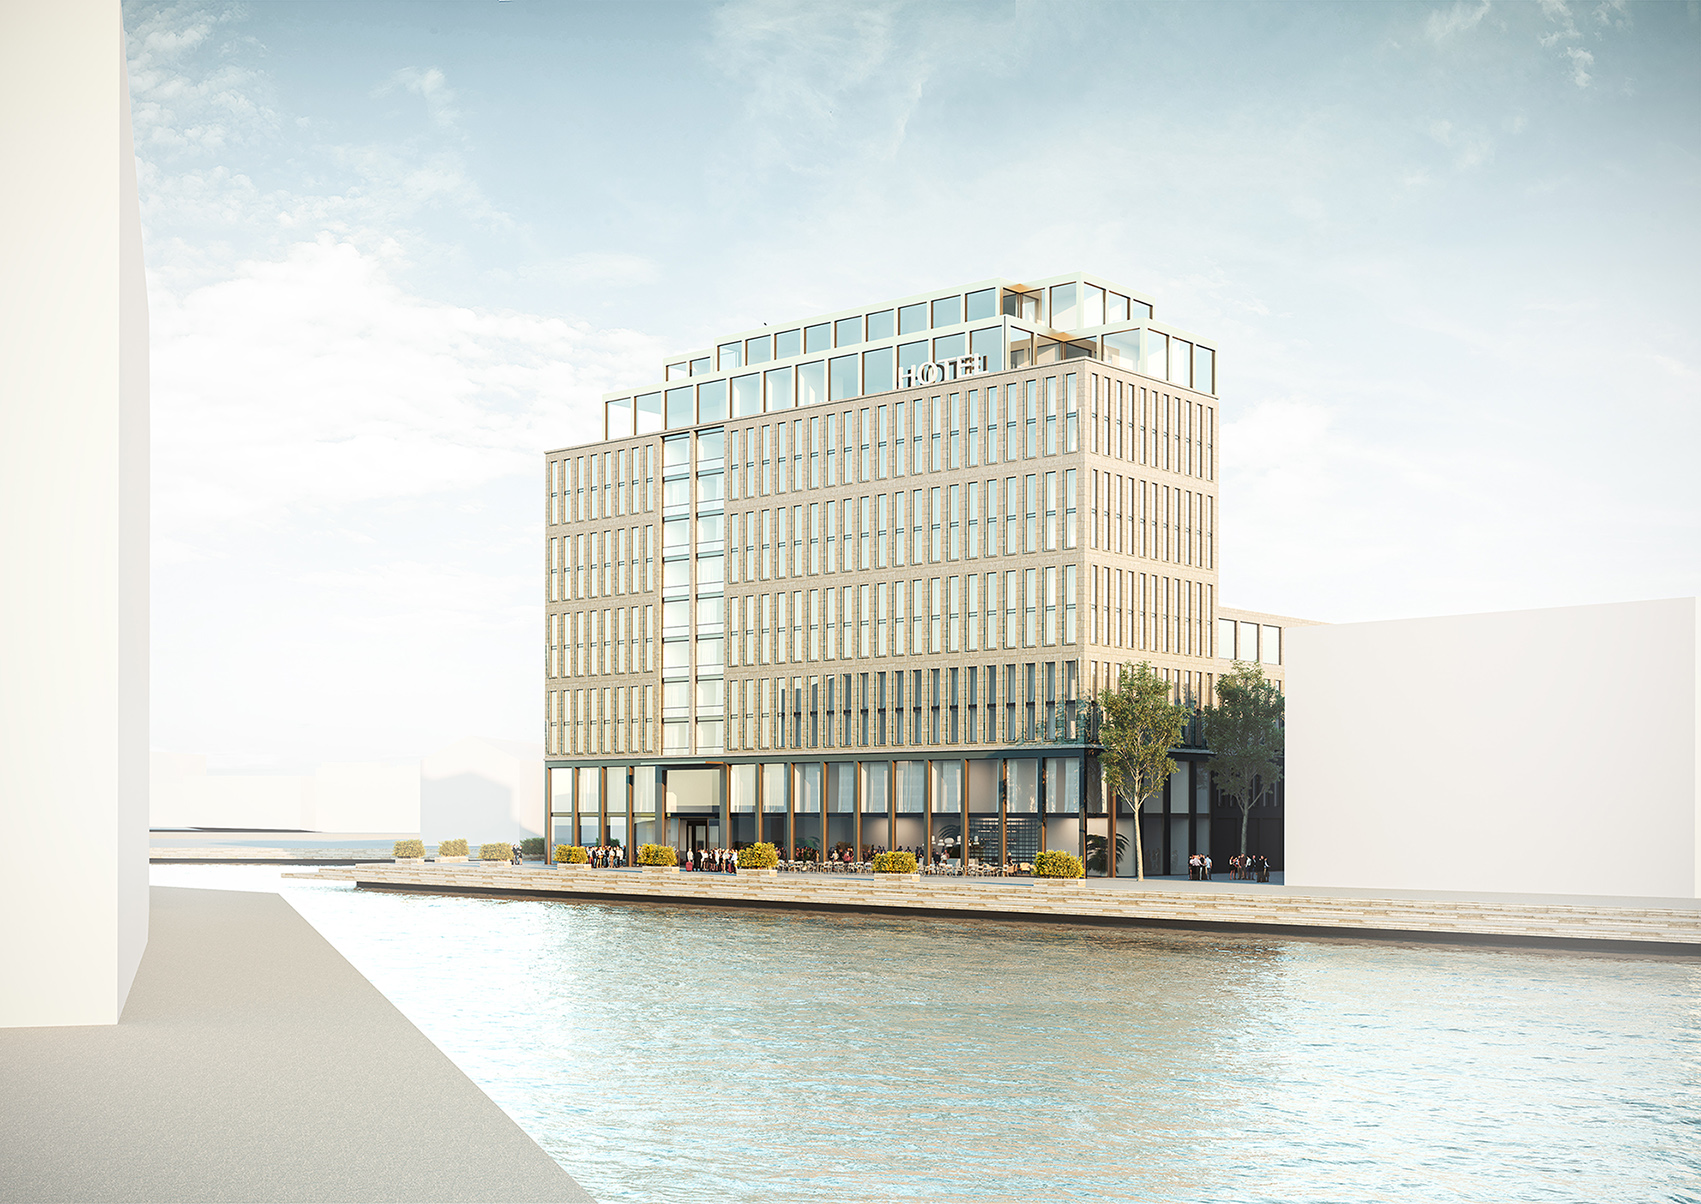 Nordic Choice Hotels' new hotel at Universitetskajen in Kalmar